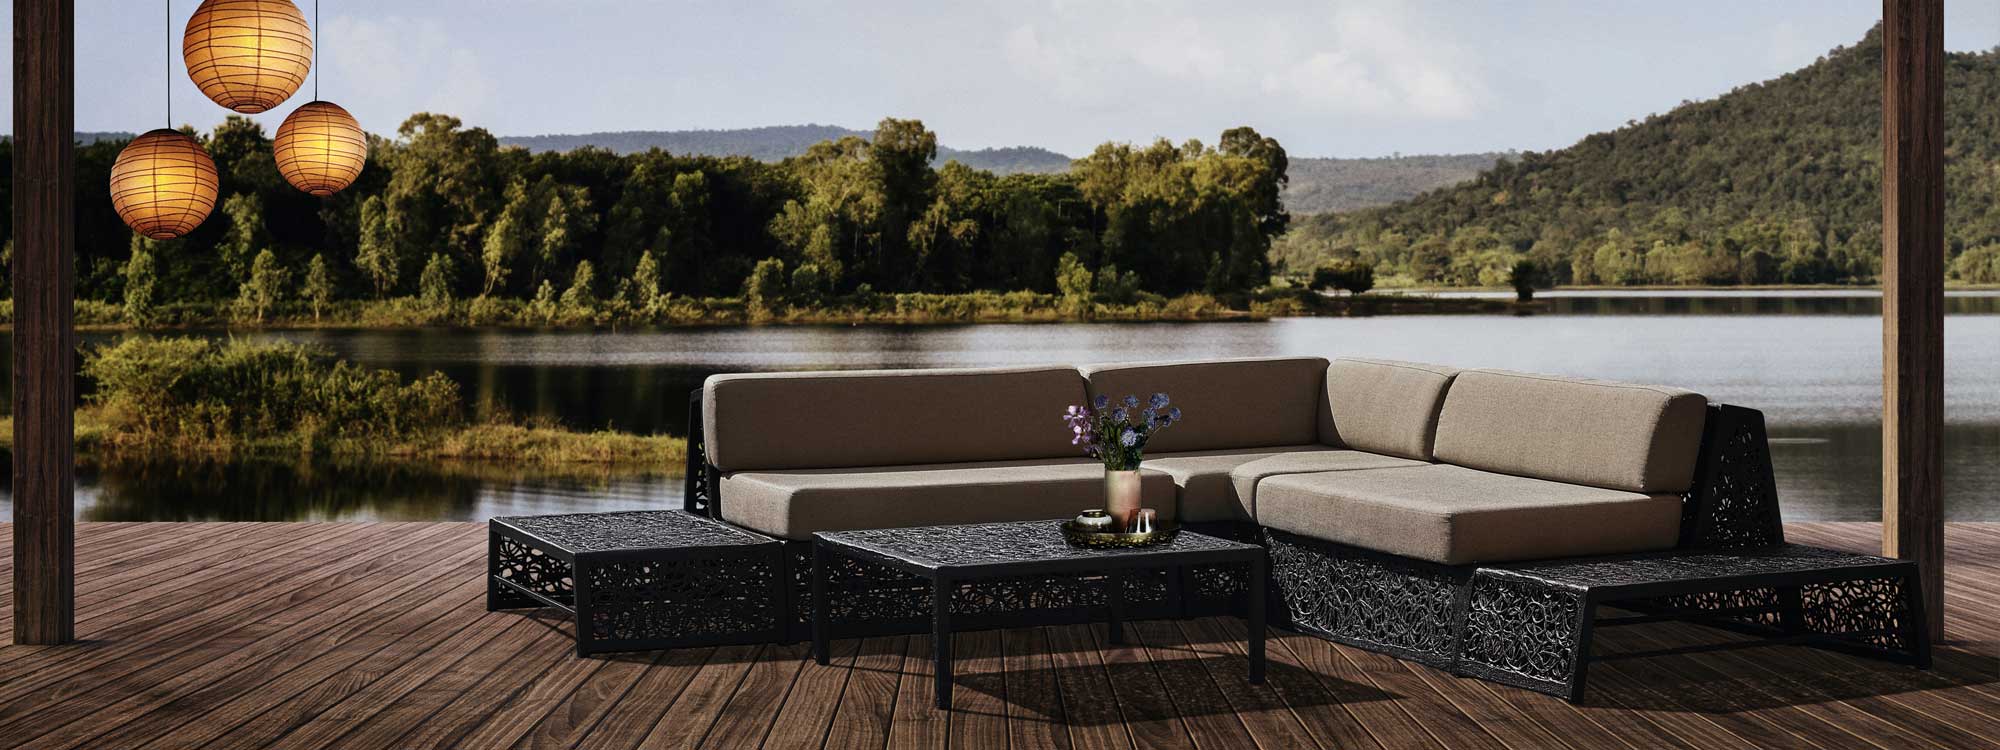 Bios Lounge outdoor corner sofa & modular garden lounge set in high performance outdoor furniture materials by Unknown modern garden furniture